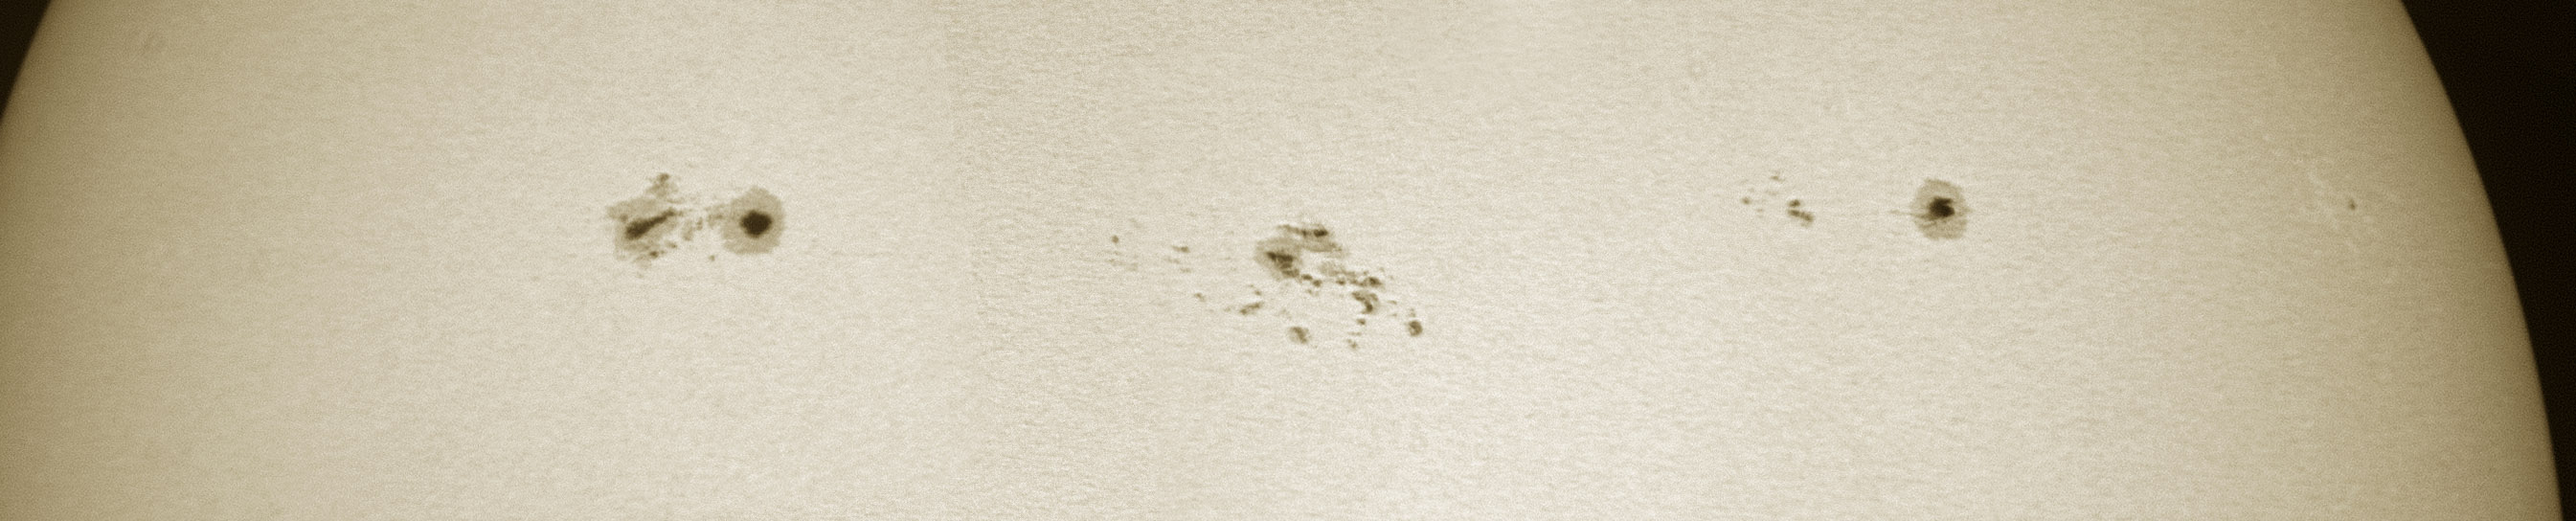 Sunspots, August 1, 2011